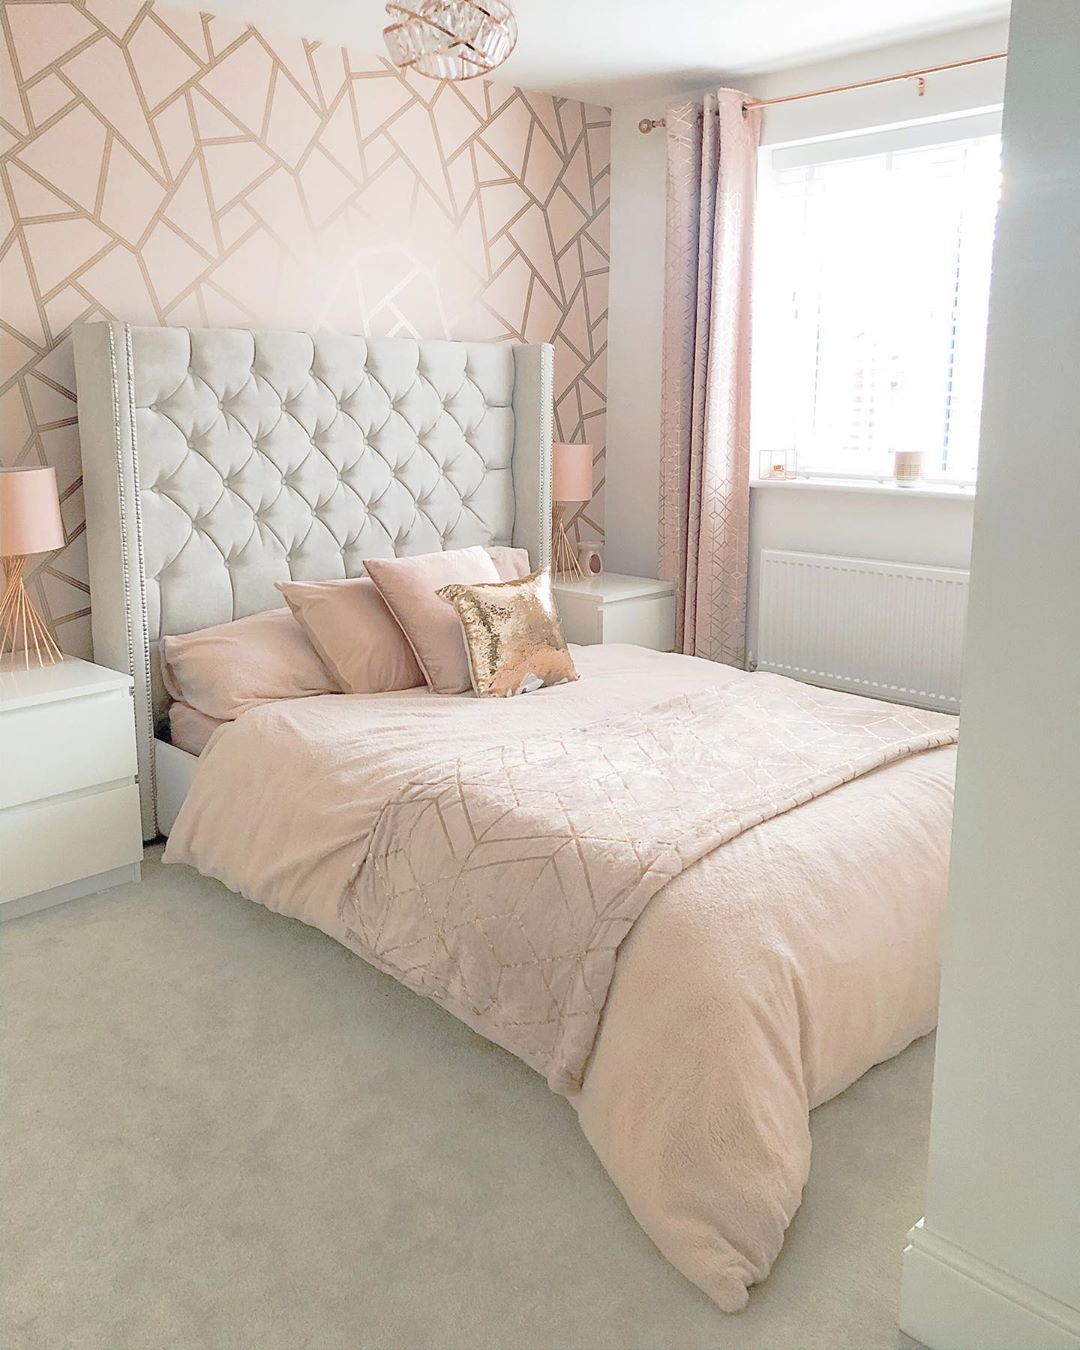 Rose gold bedroom design. Photo by Instagram user @themarklandhome